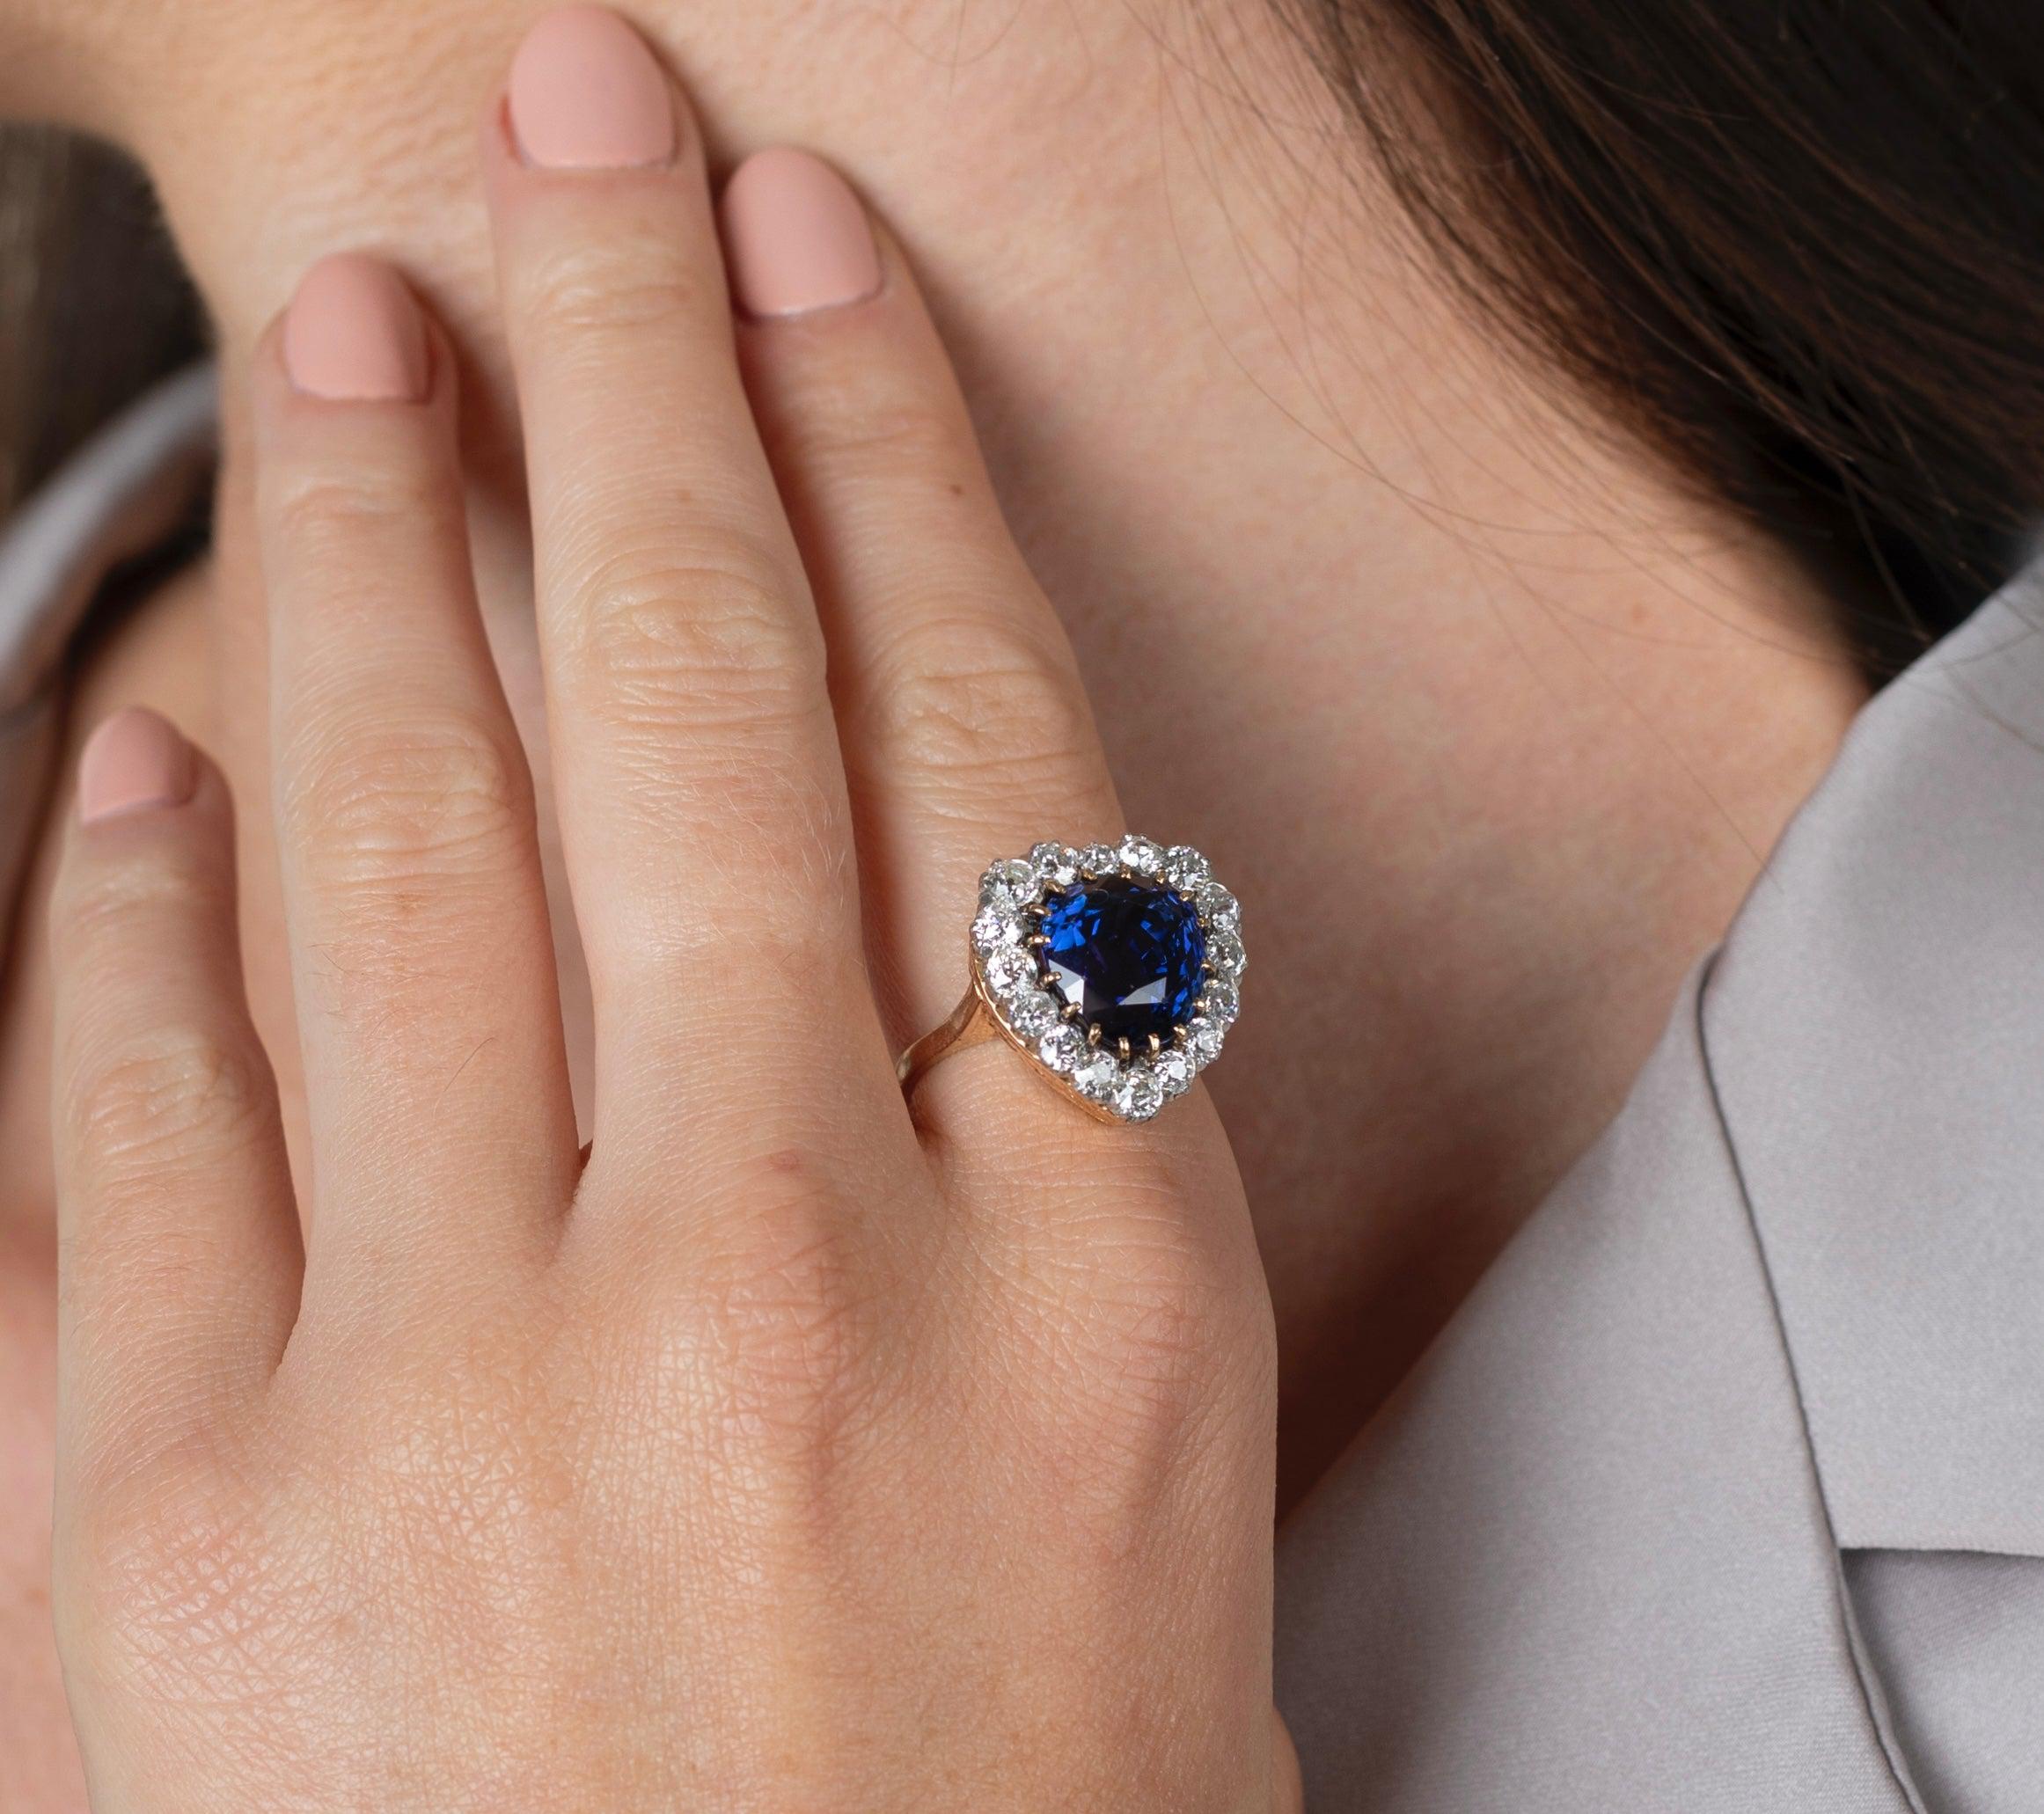 9-Carat-No-Heat-Ceylon-Blue-Sapphire-and-Old-Euro-Cut-Diamond-Ring-in-14K-Rings-2.jpg